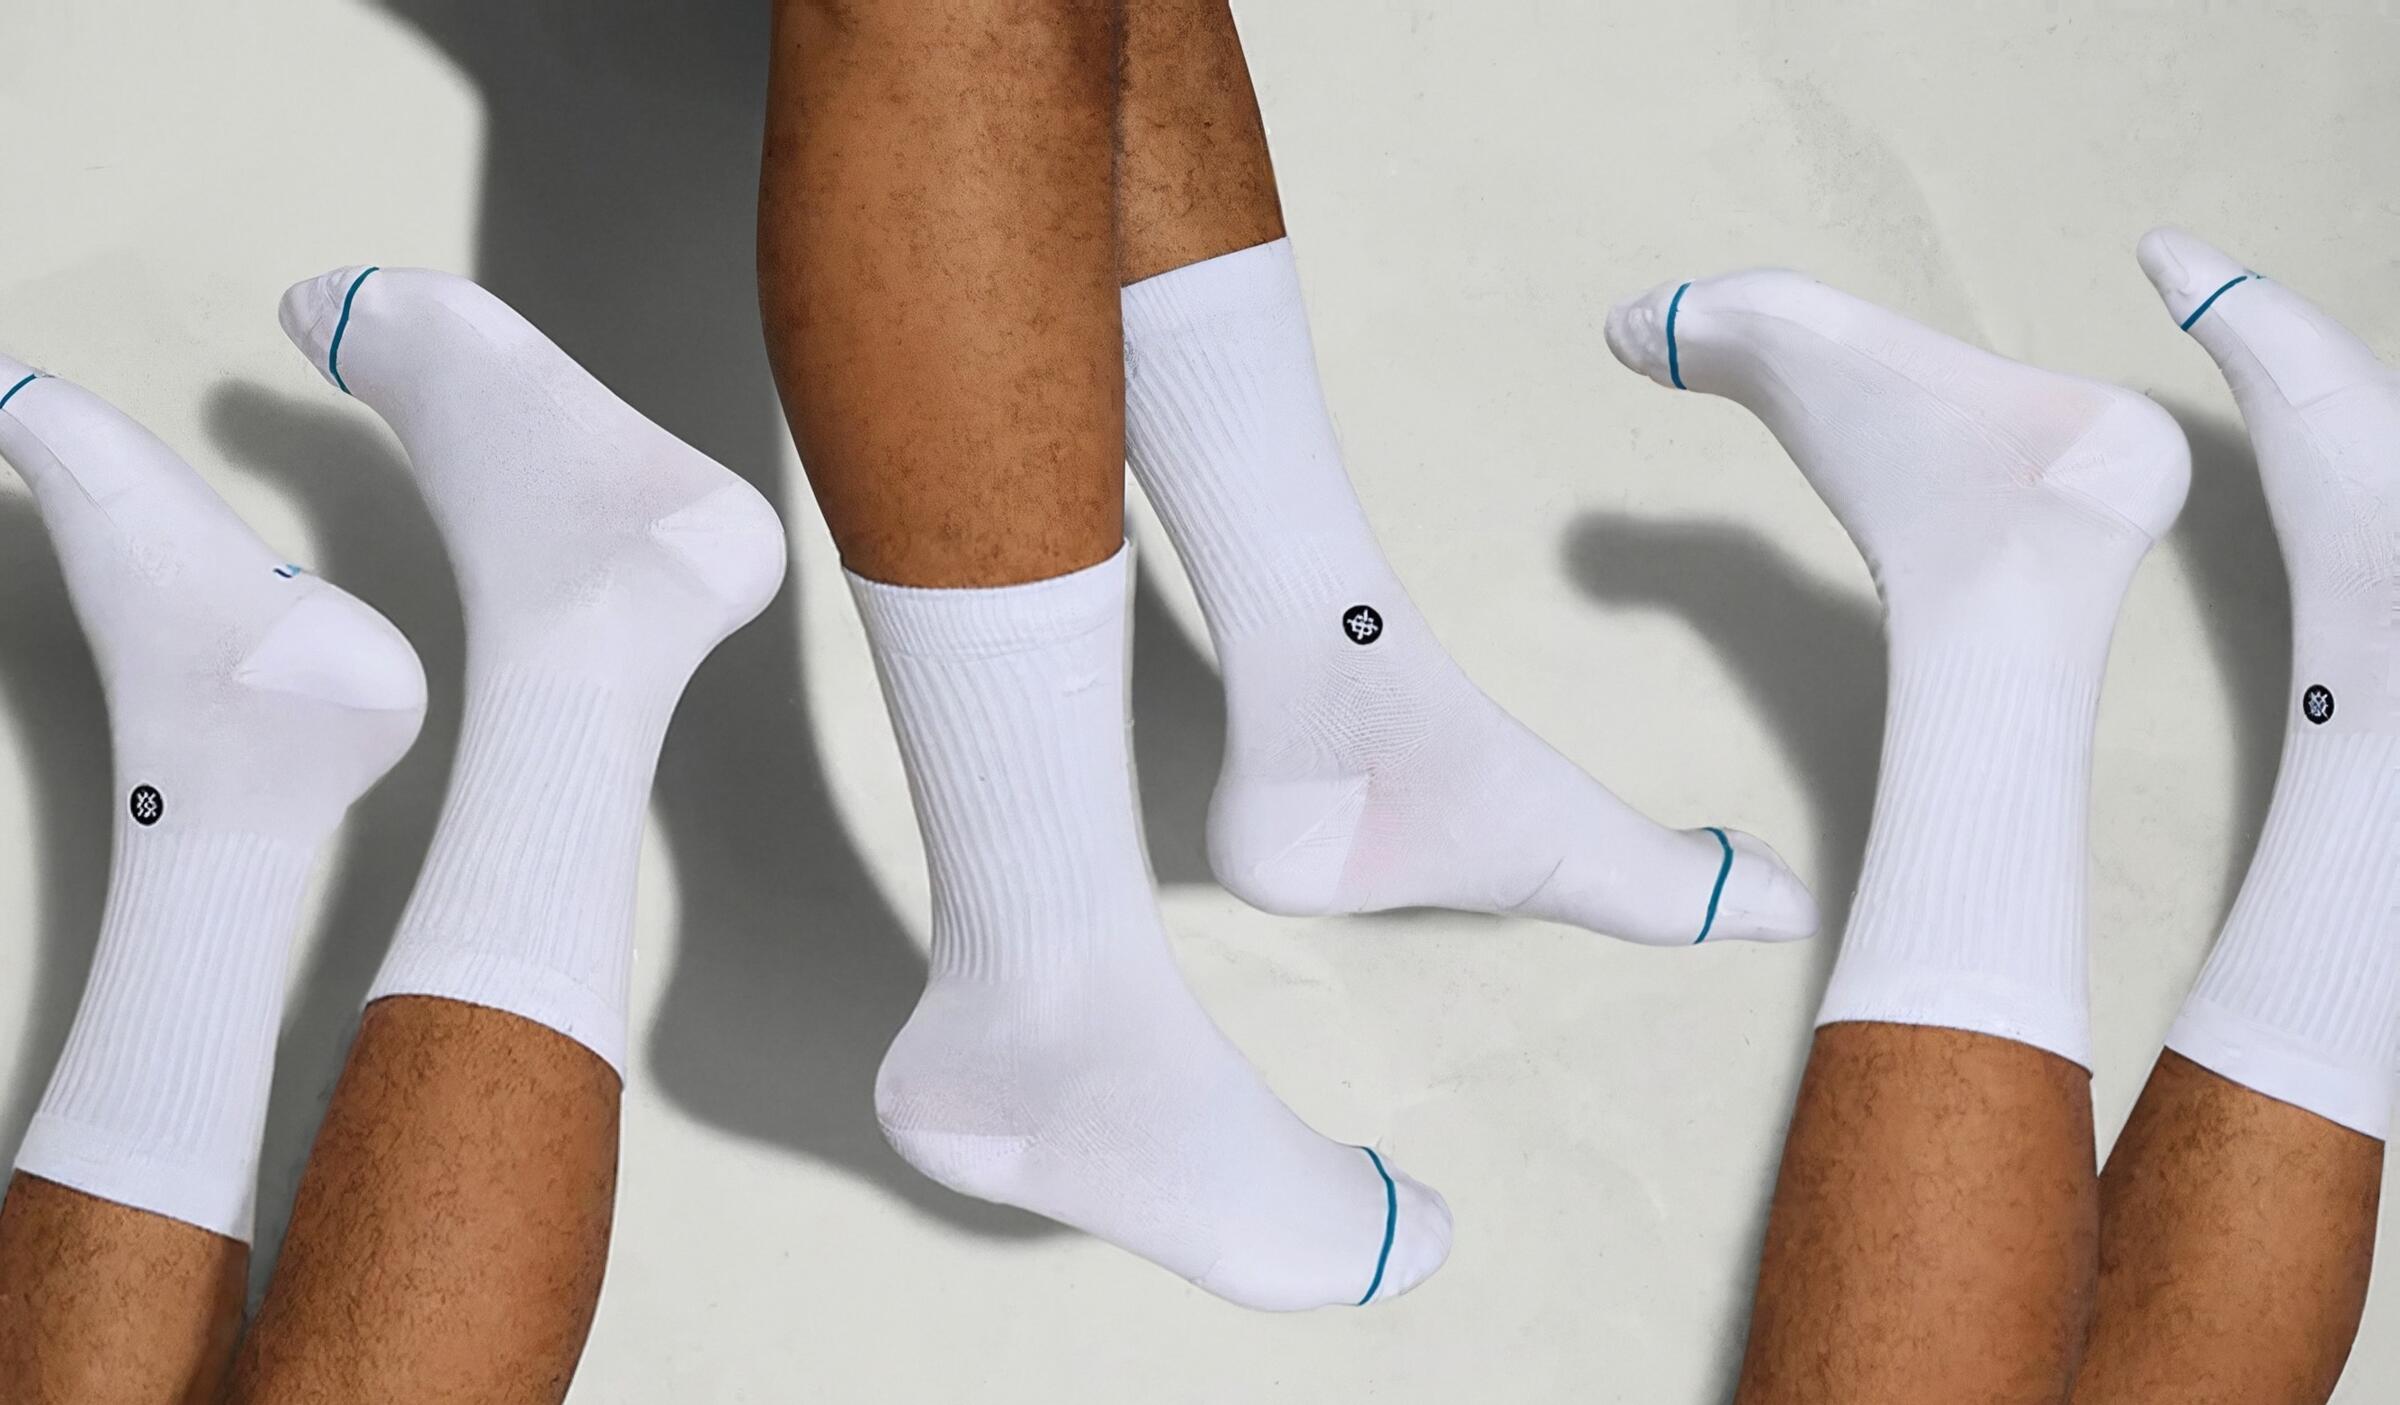 Foot Traffic Men's Size Matters Socks